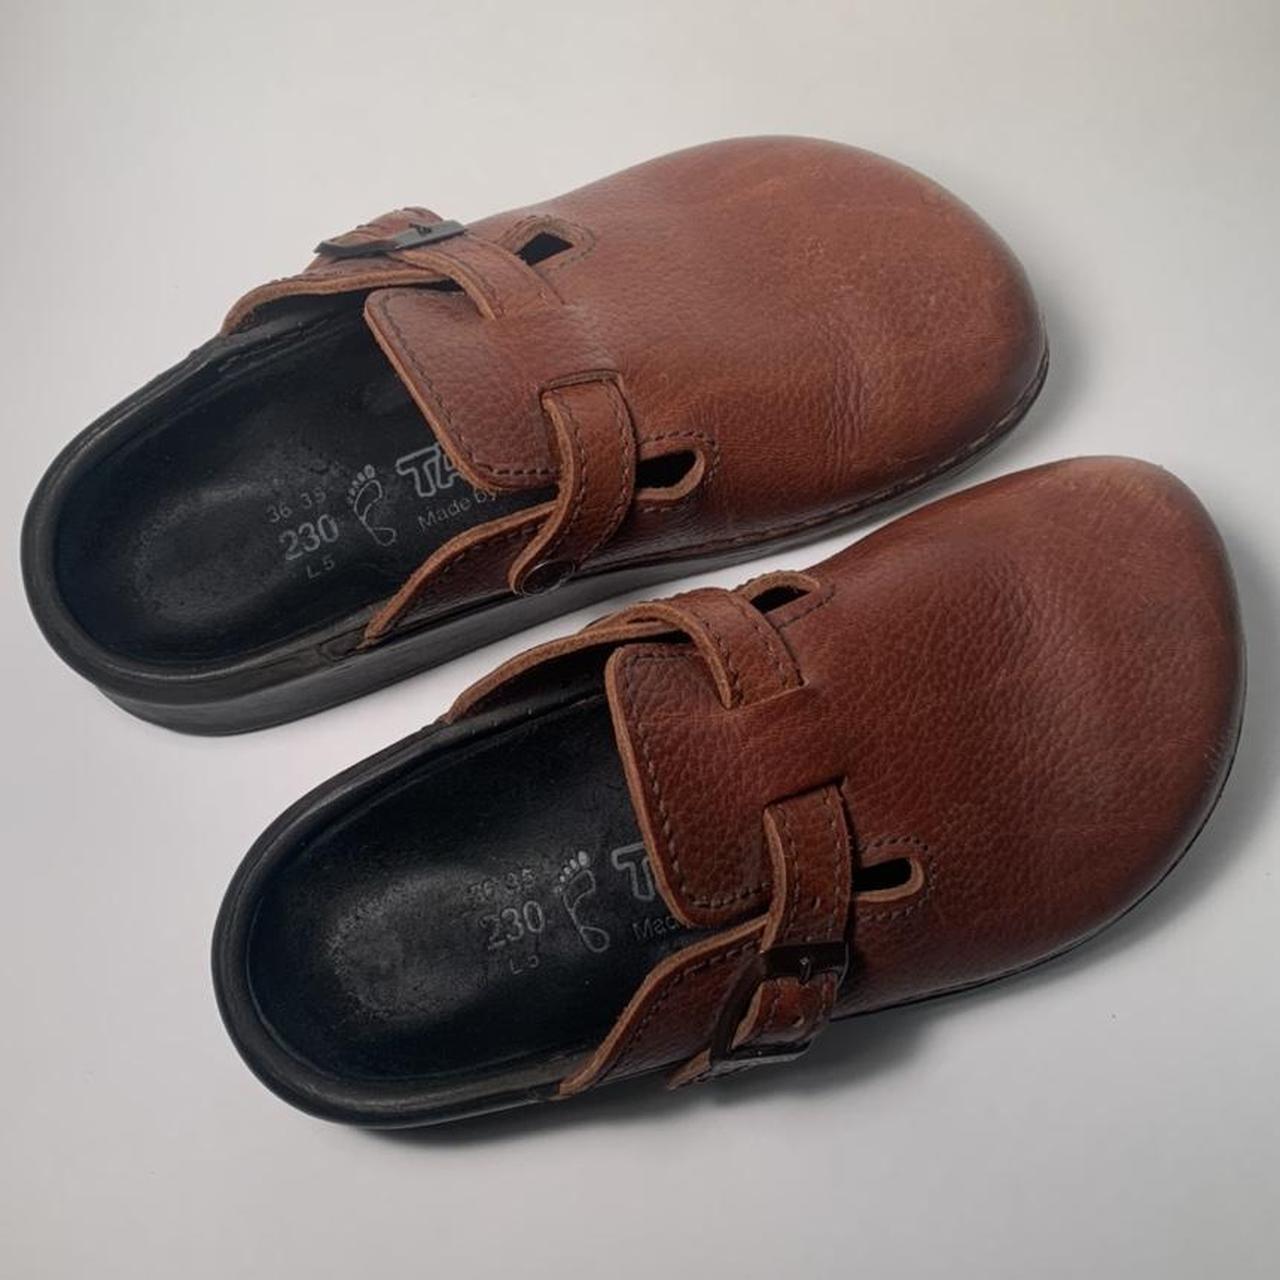 Product Image 2 - Birkenstock Boston Tatami Leather Clogs